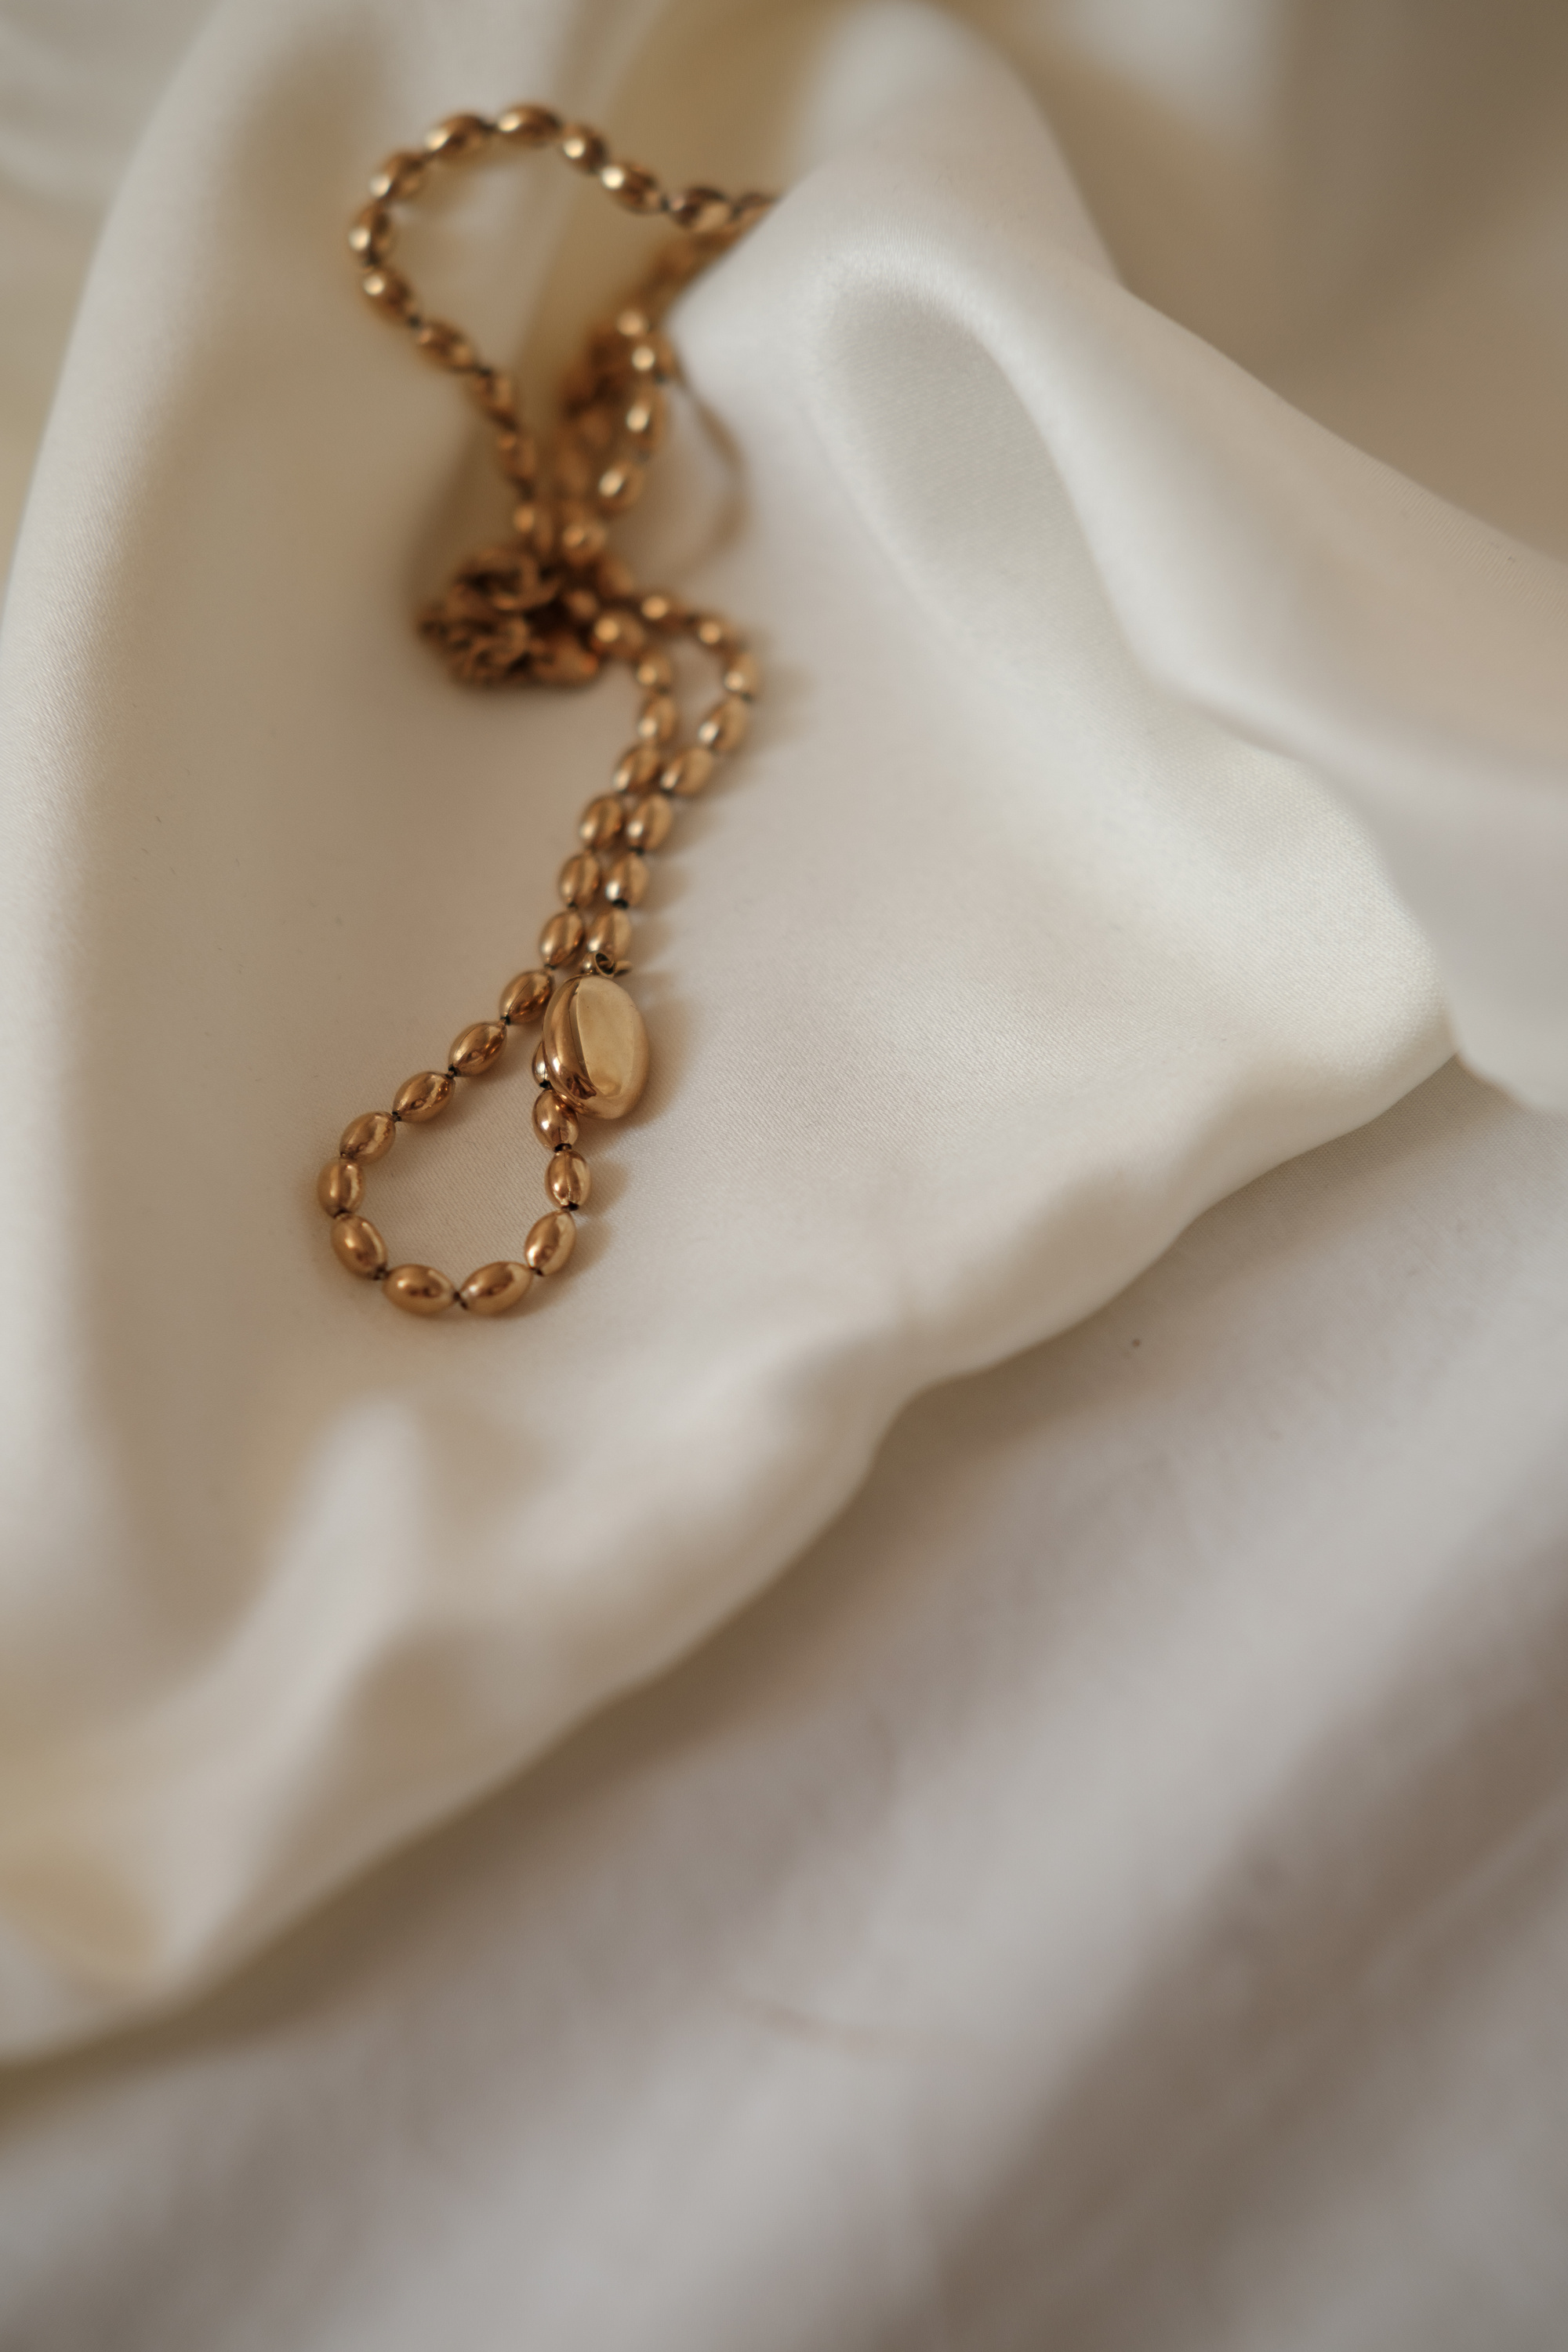 Gold Jewelry on White Silk Cloth